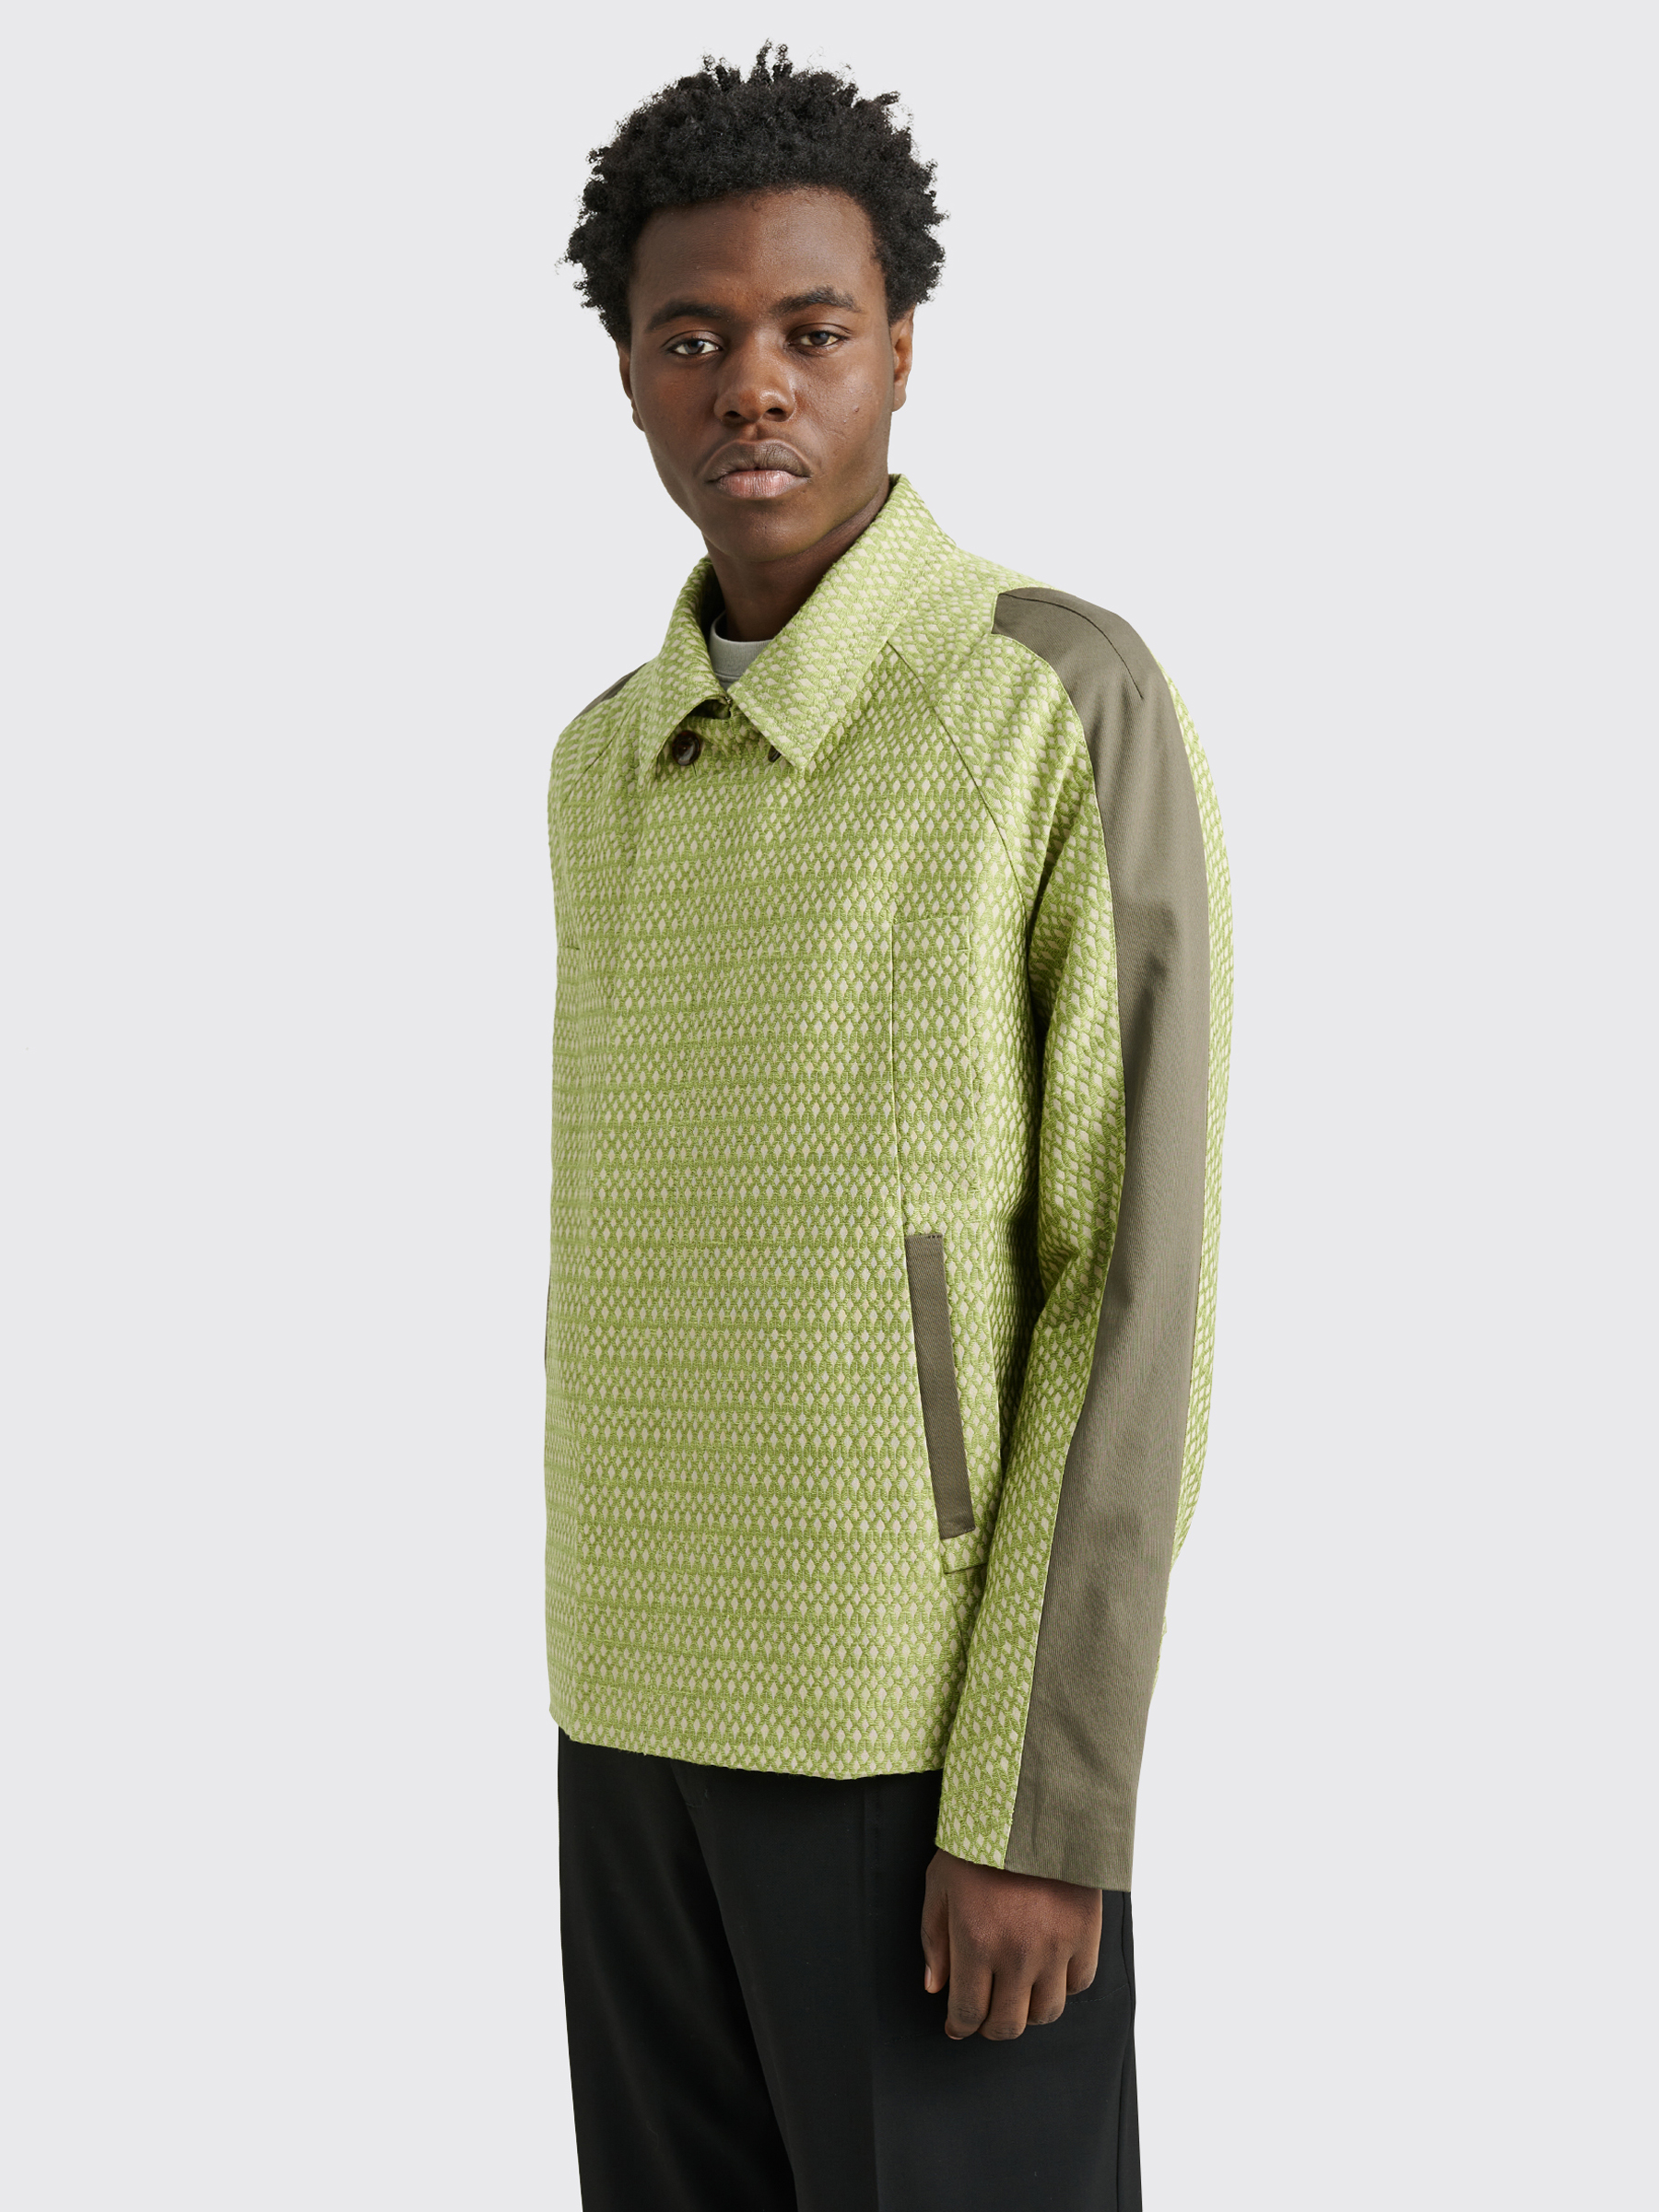 Très Bien - Kiko Kostadinov Tonkin Contrast Jacket Green Sand / Khaki